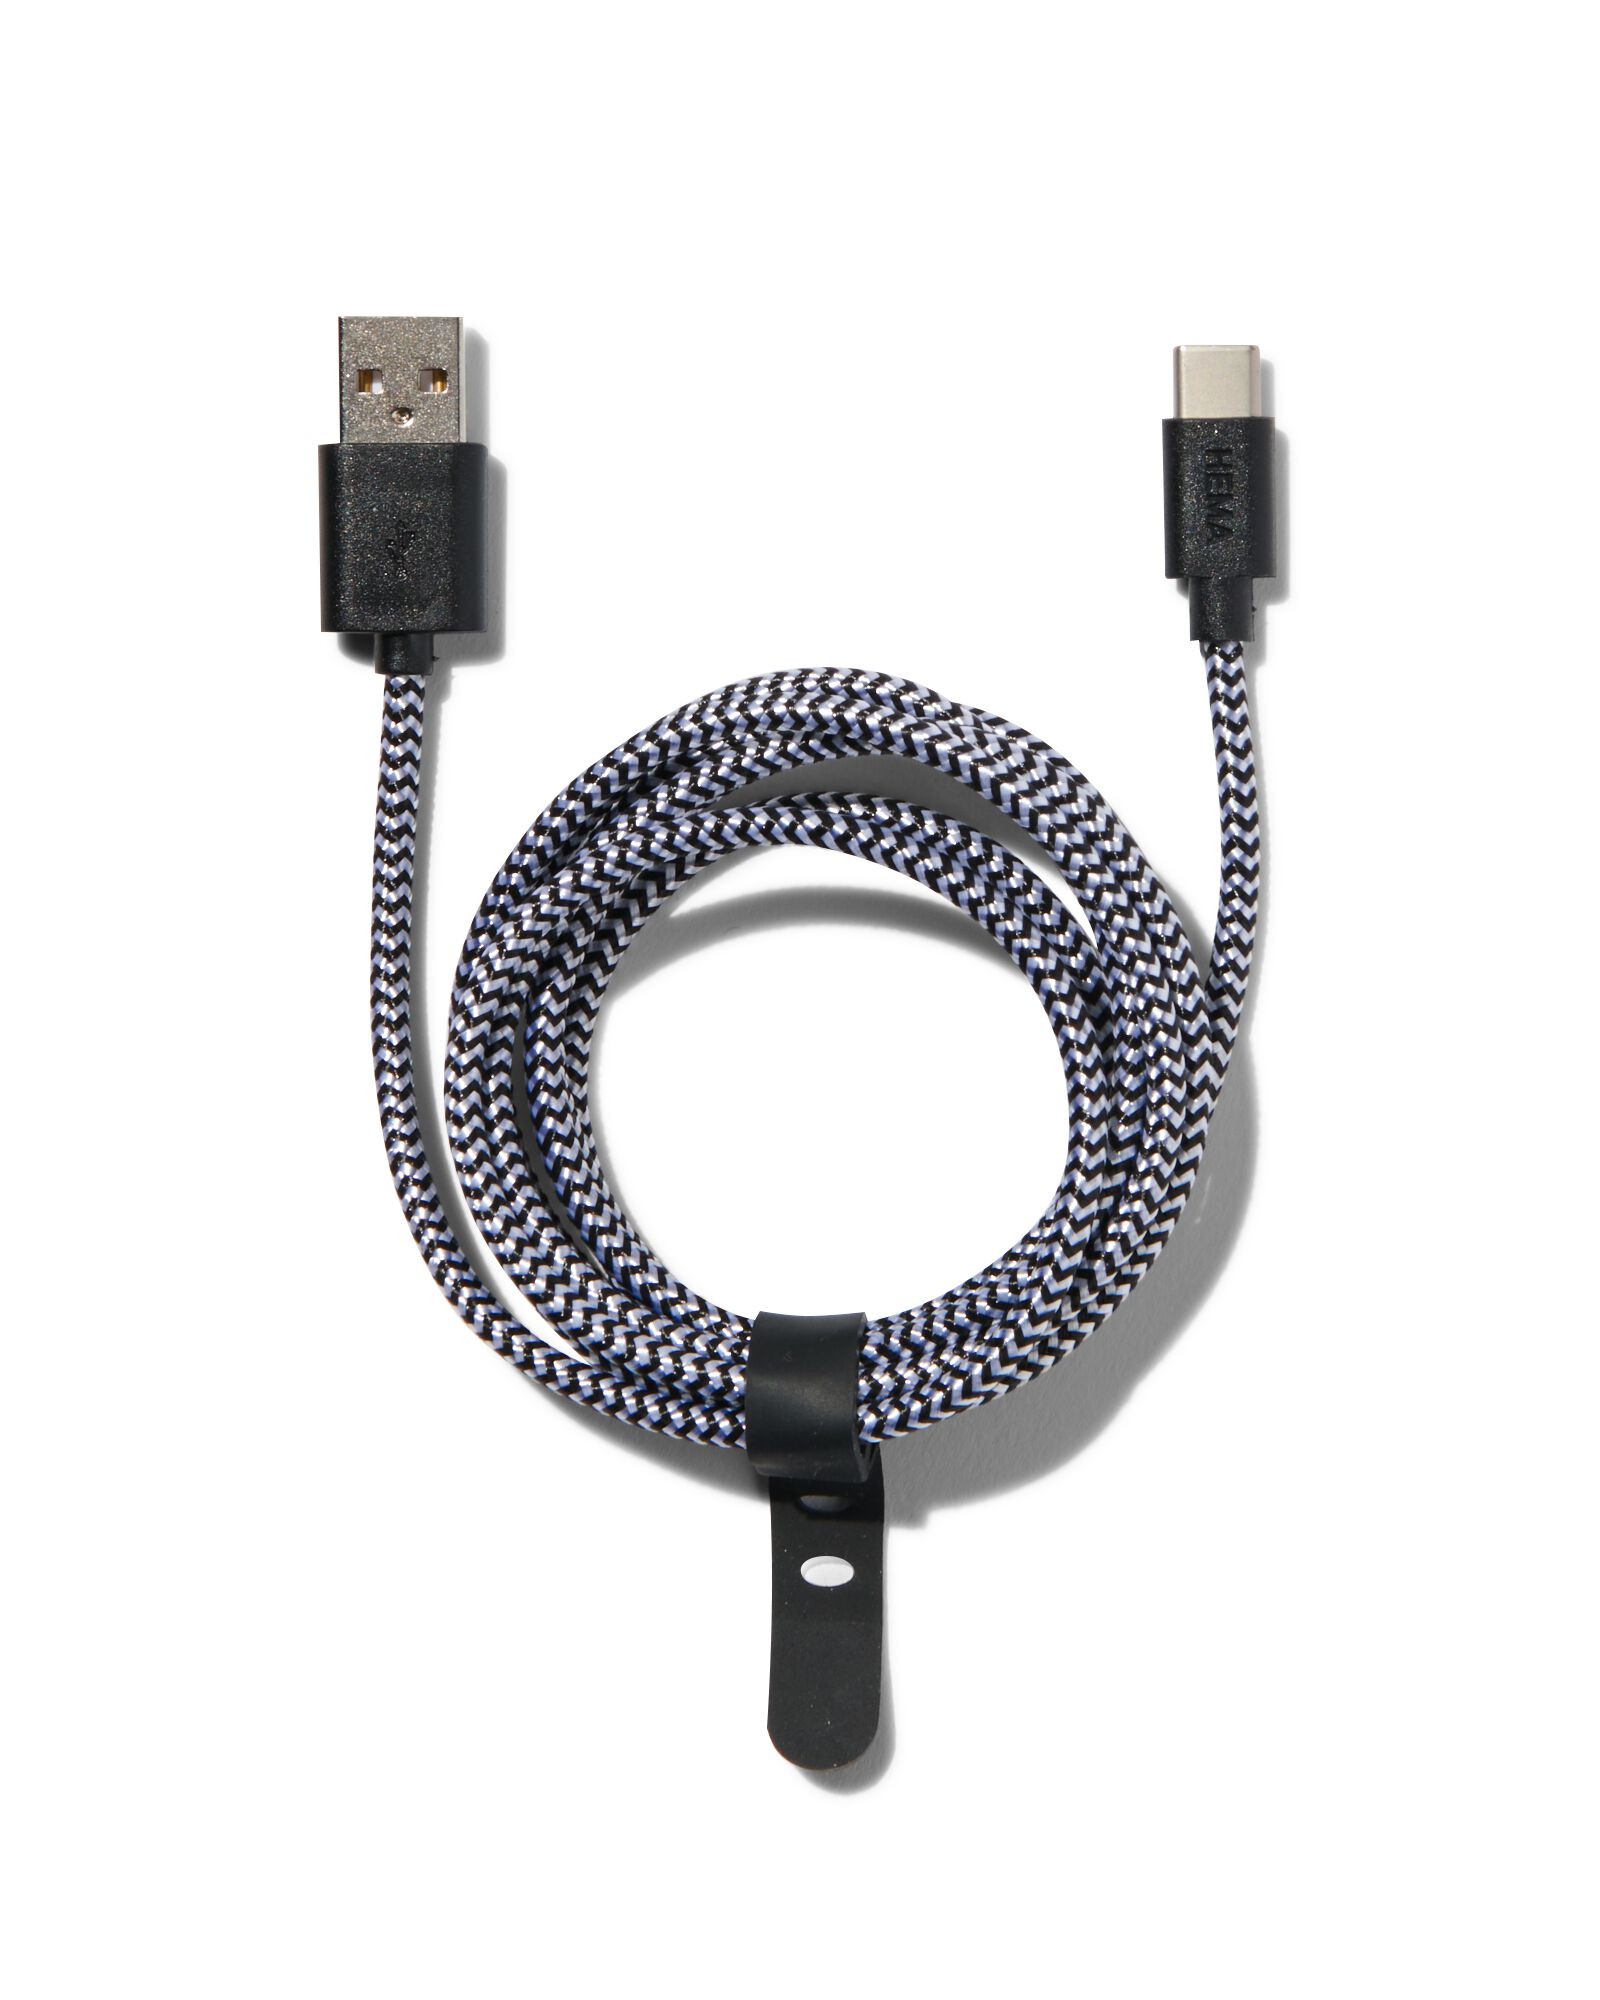 câble chargeur USB/USB-C 1.5m - 39630175 - HEMA